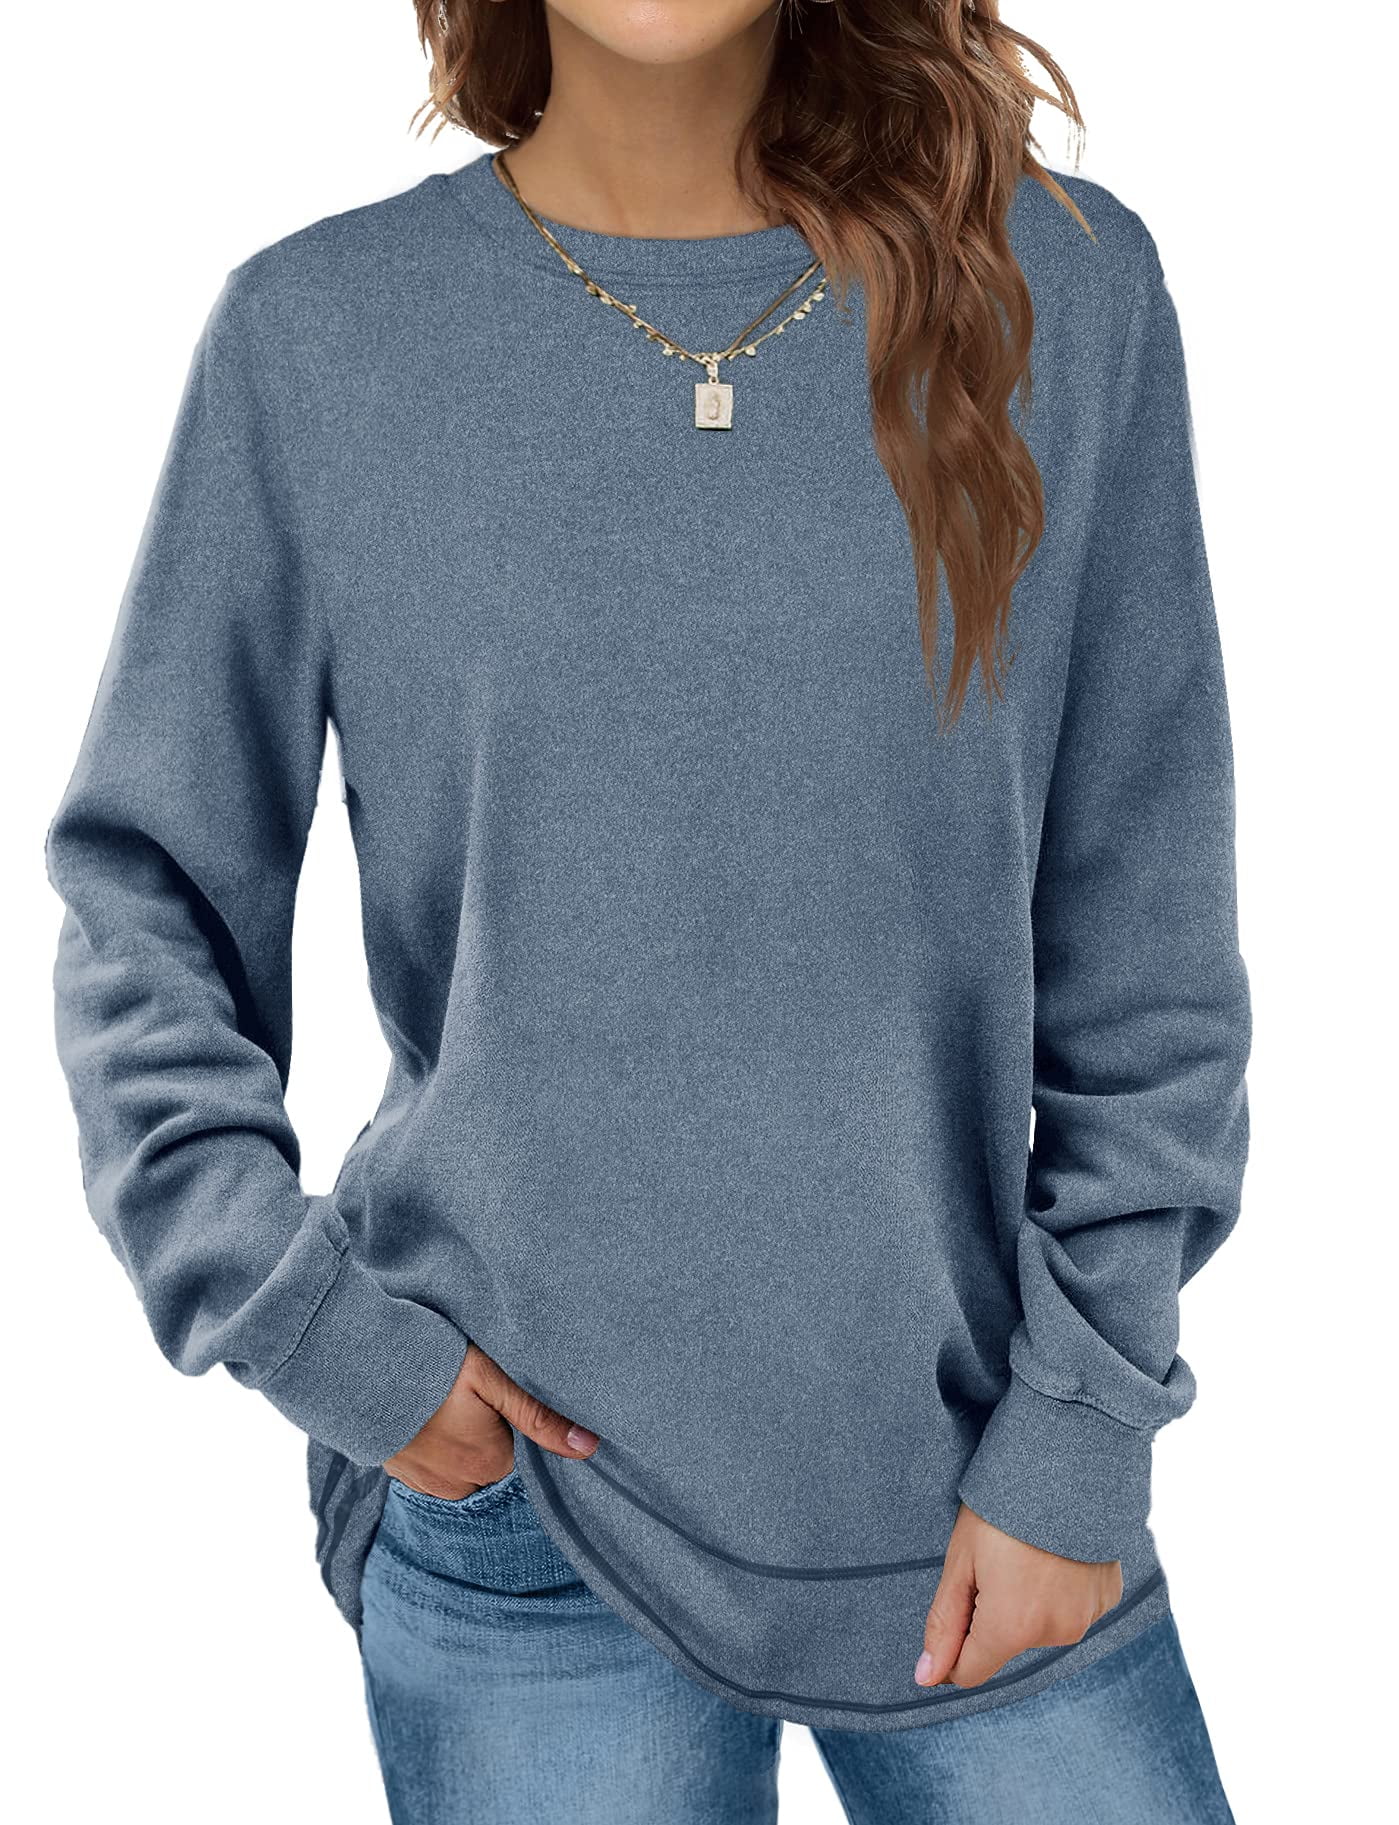 Aiyino Sweatshirts for Women Crewneck Long Sleeve Shirts Tunic Tops for ...